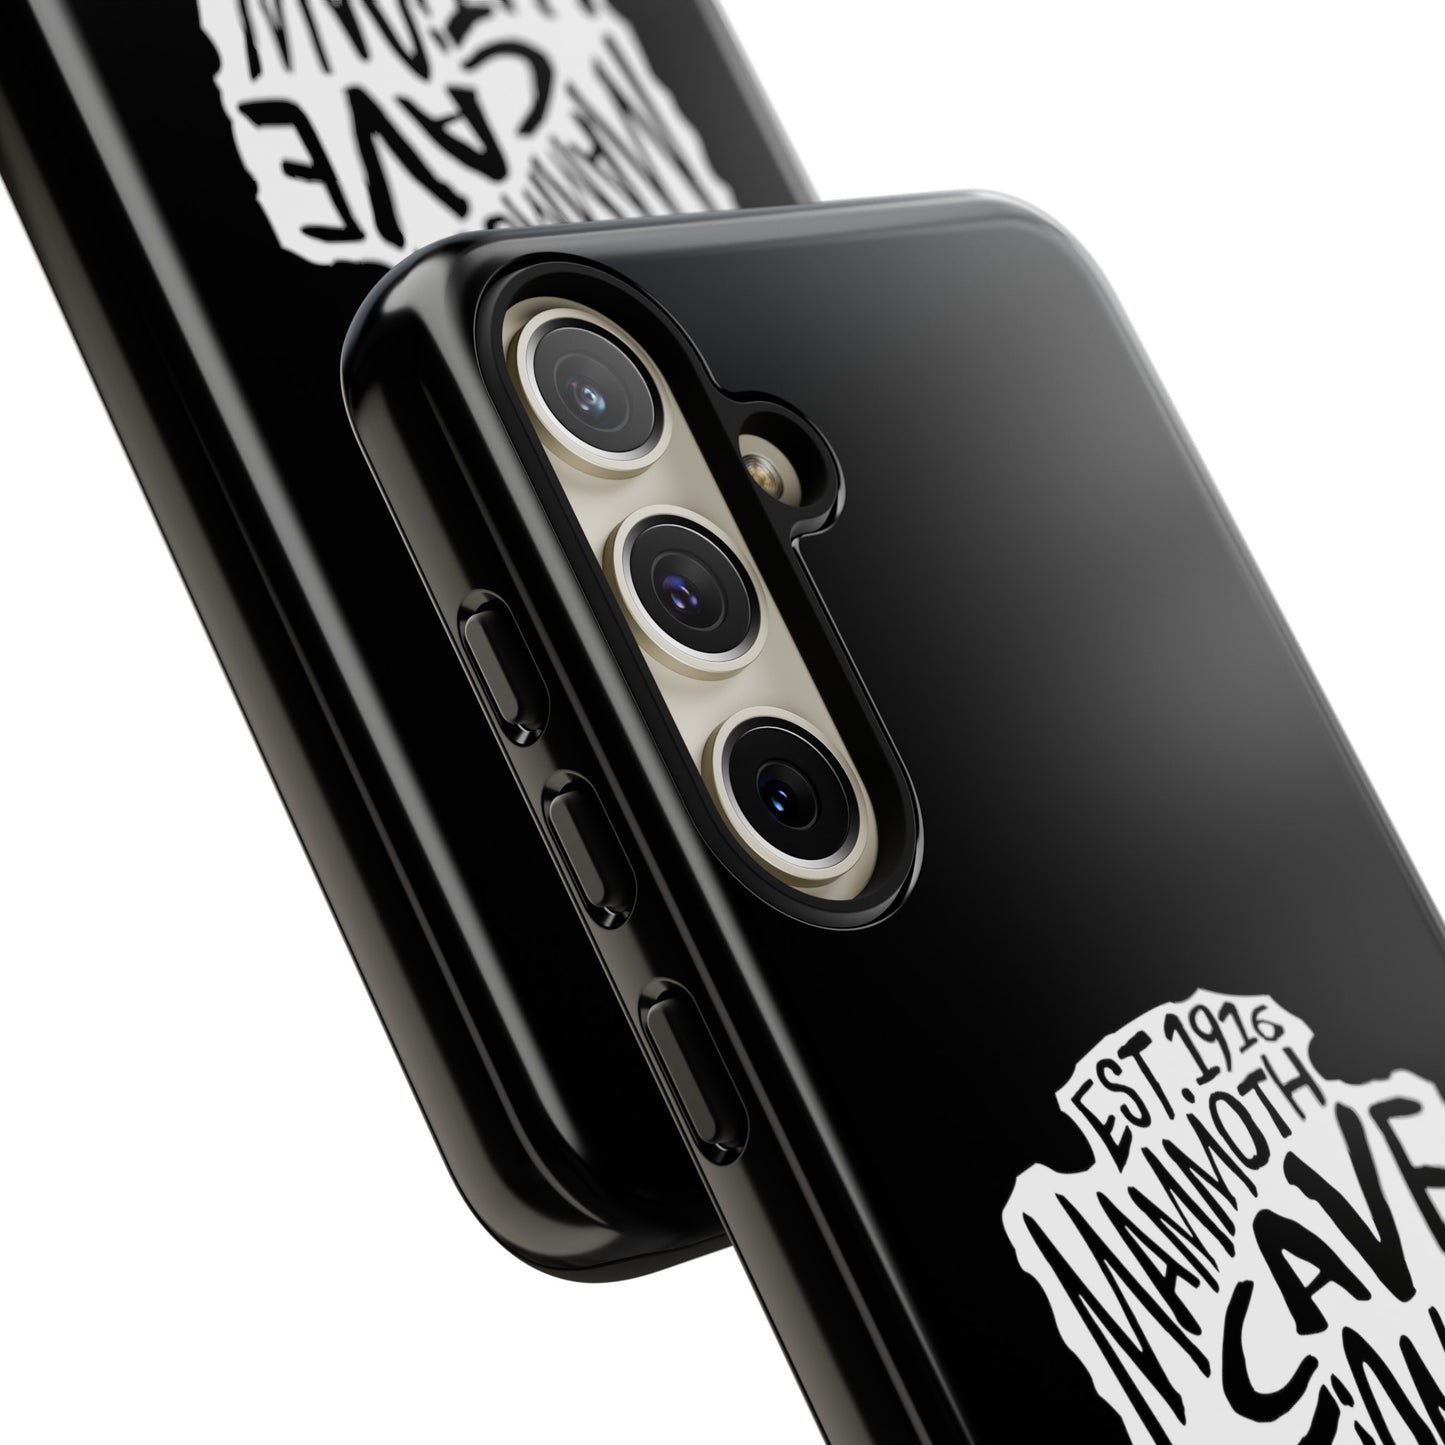 Mammoth Cave National Park Phone Case - Arrowhead Design